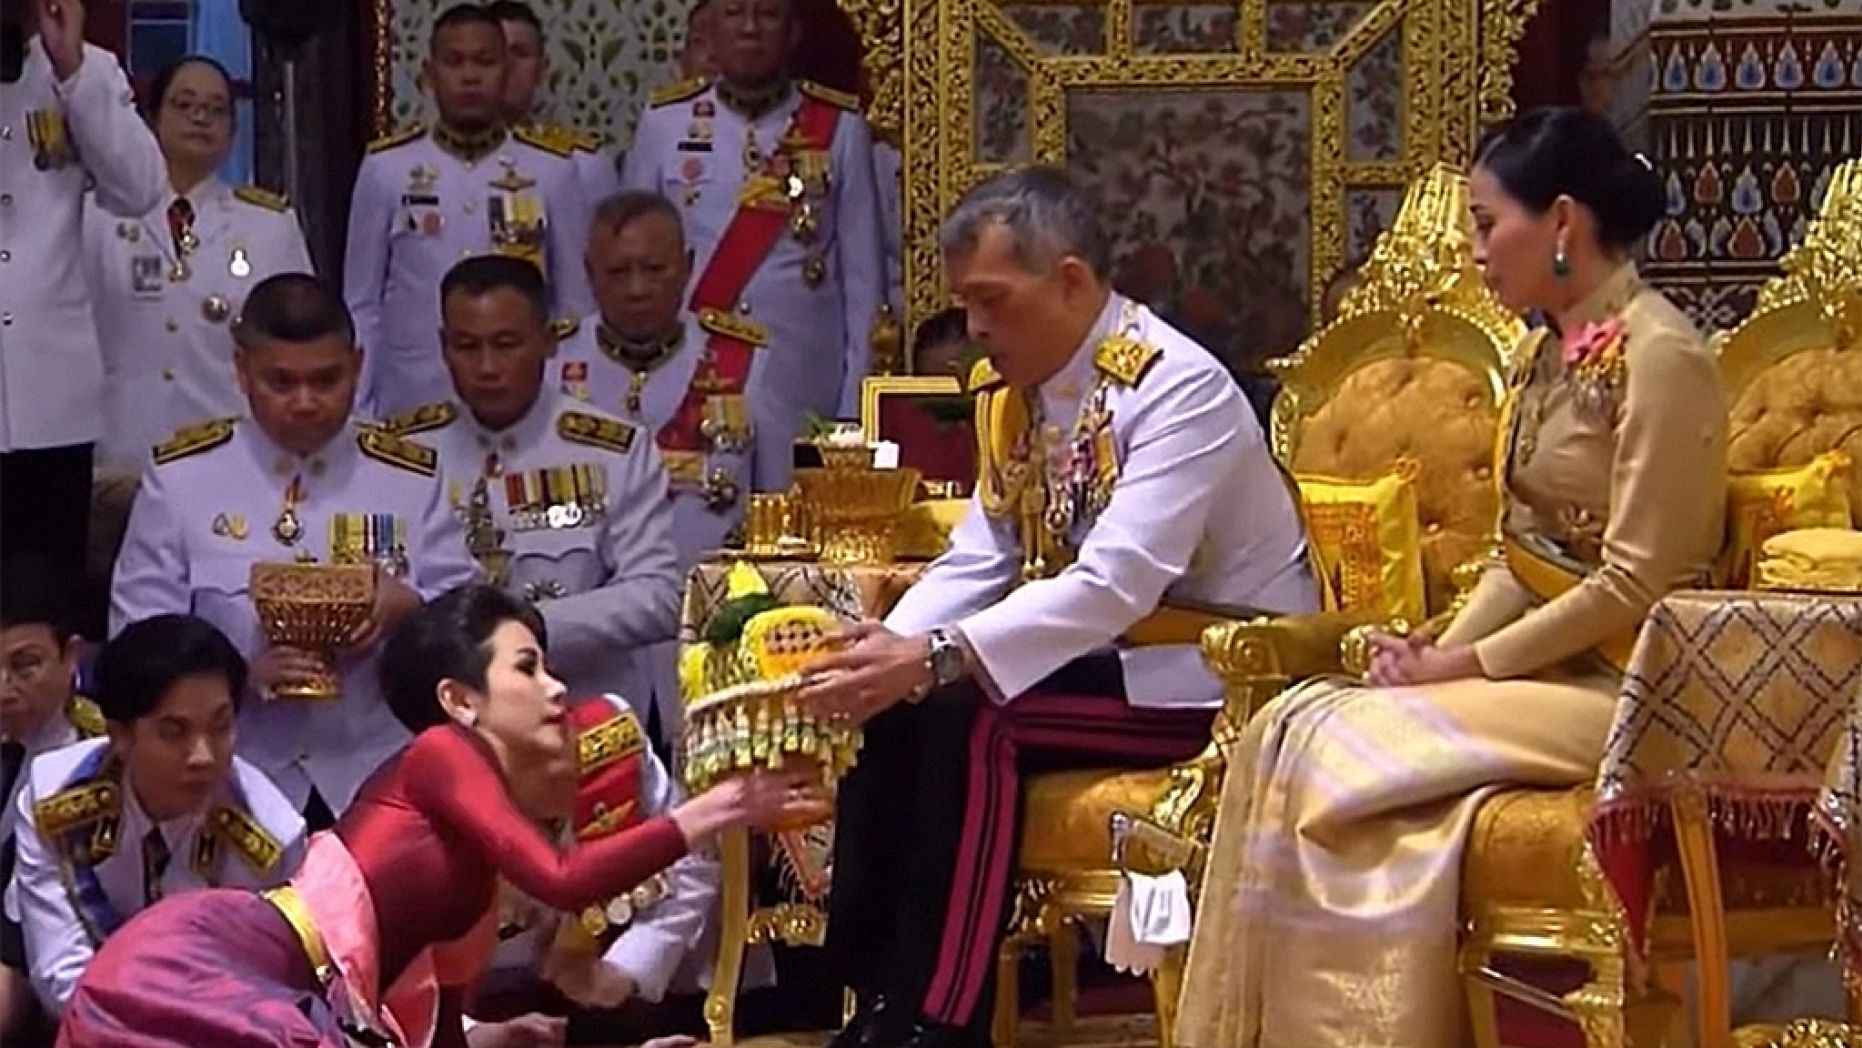 Thai king Maha Vajiralongkorn anoints his mistress as his official concubine